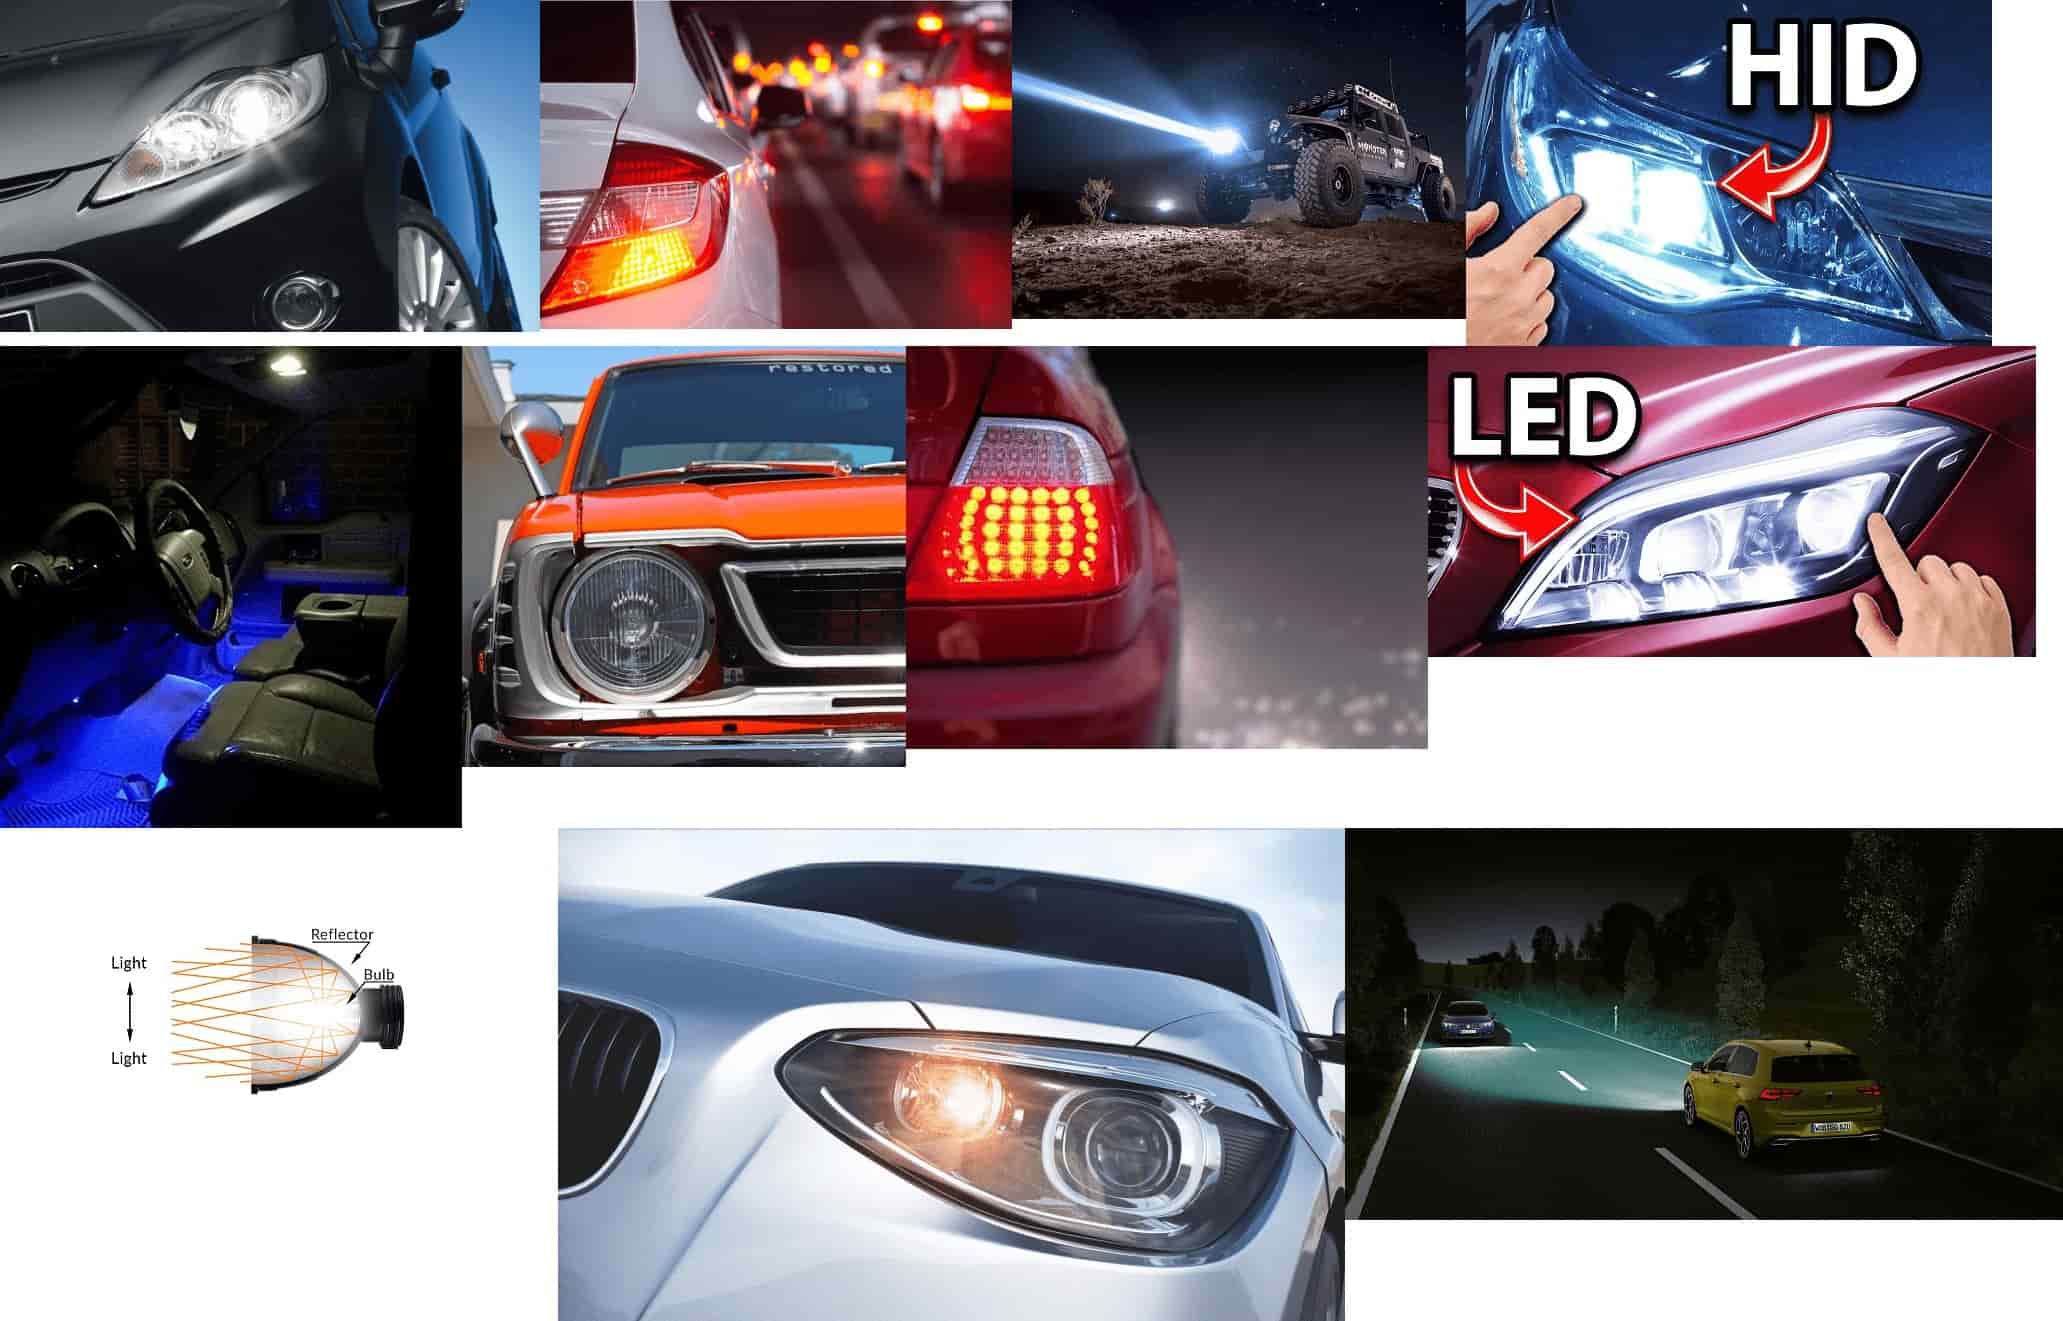 https://themechanicalengineering.com/wp-content/uploads/2022/10/Feature-Image-of-car-Headlight.jpg